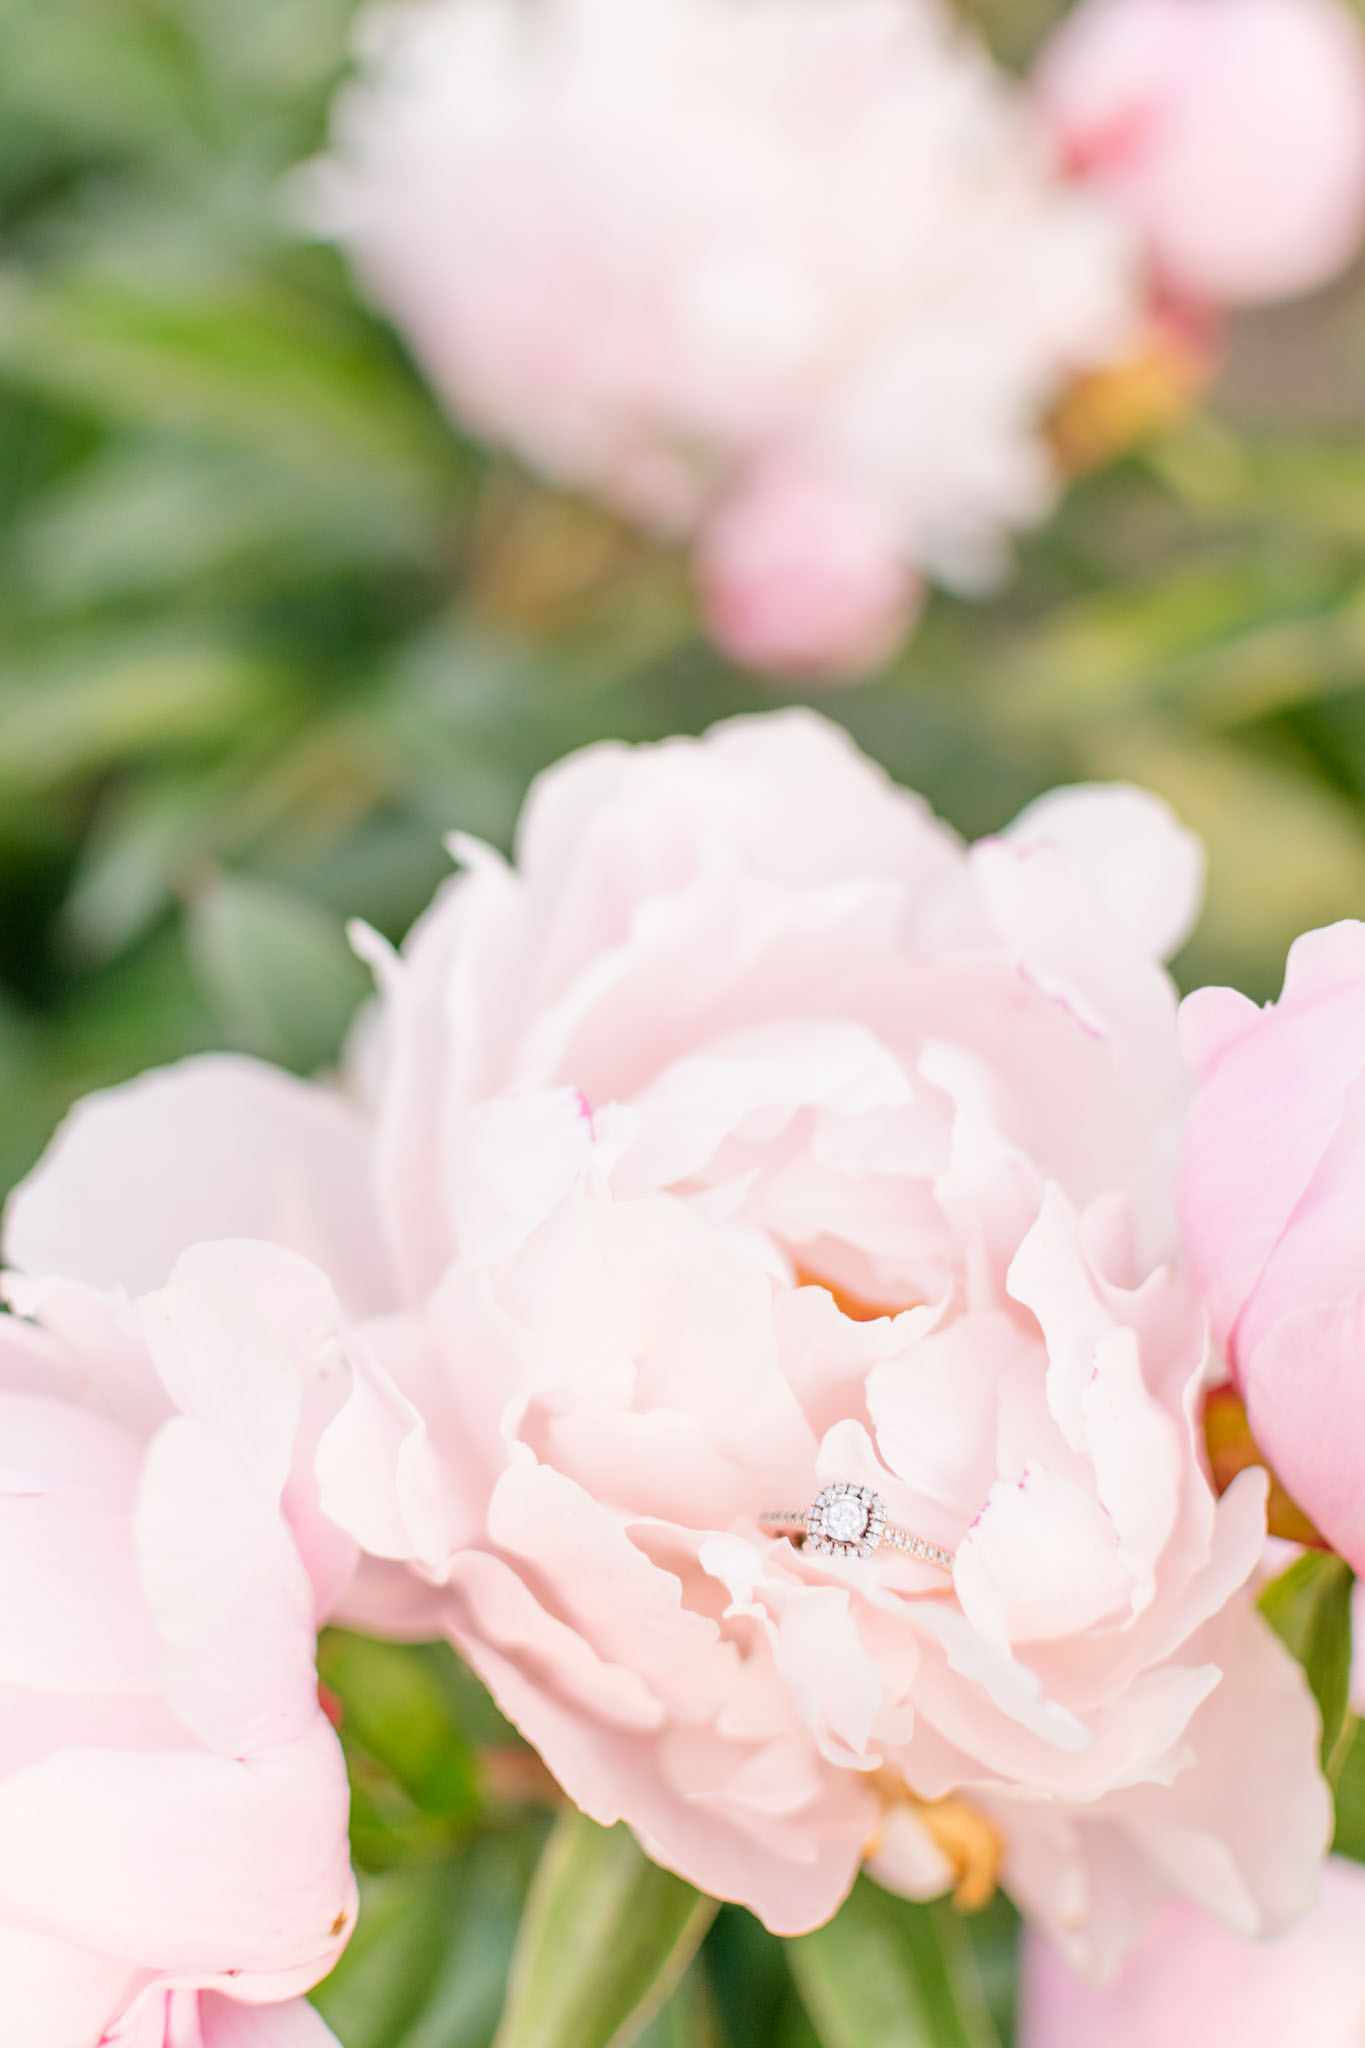 Engagement Ring sitting inside pink flower.